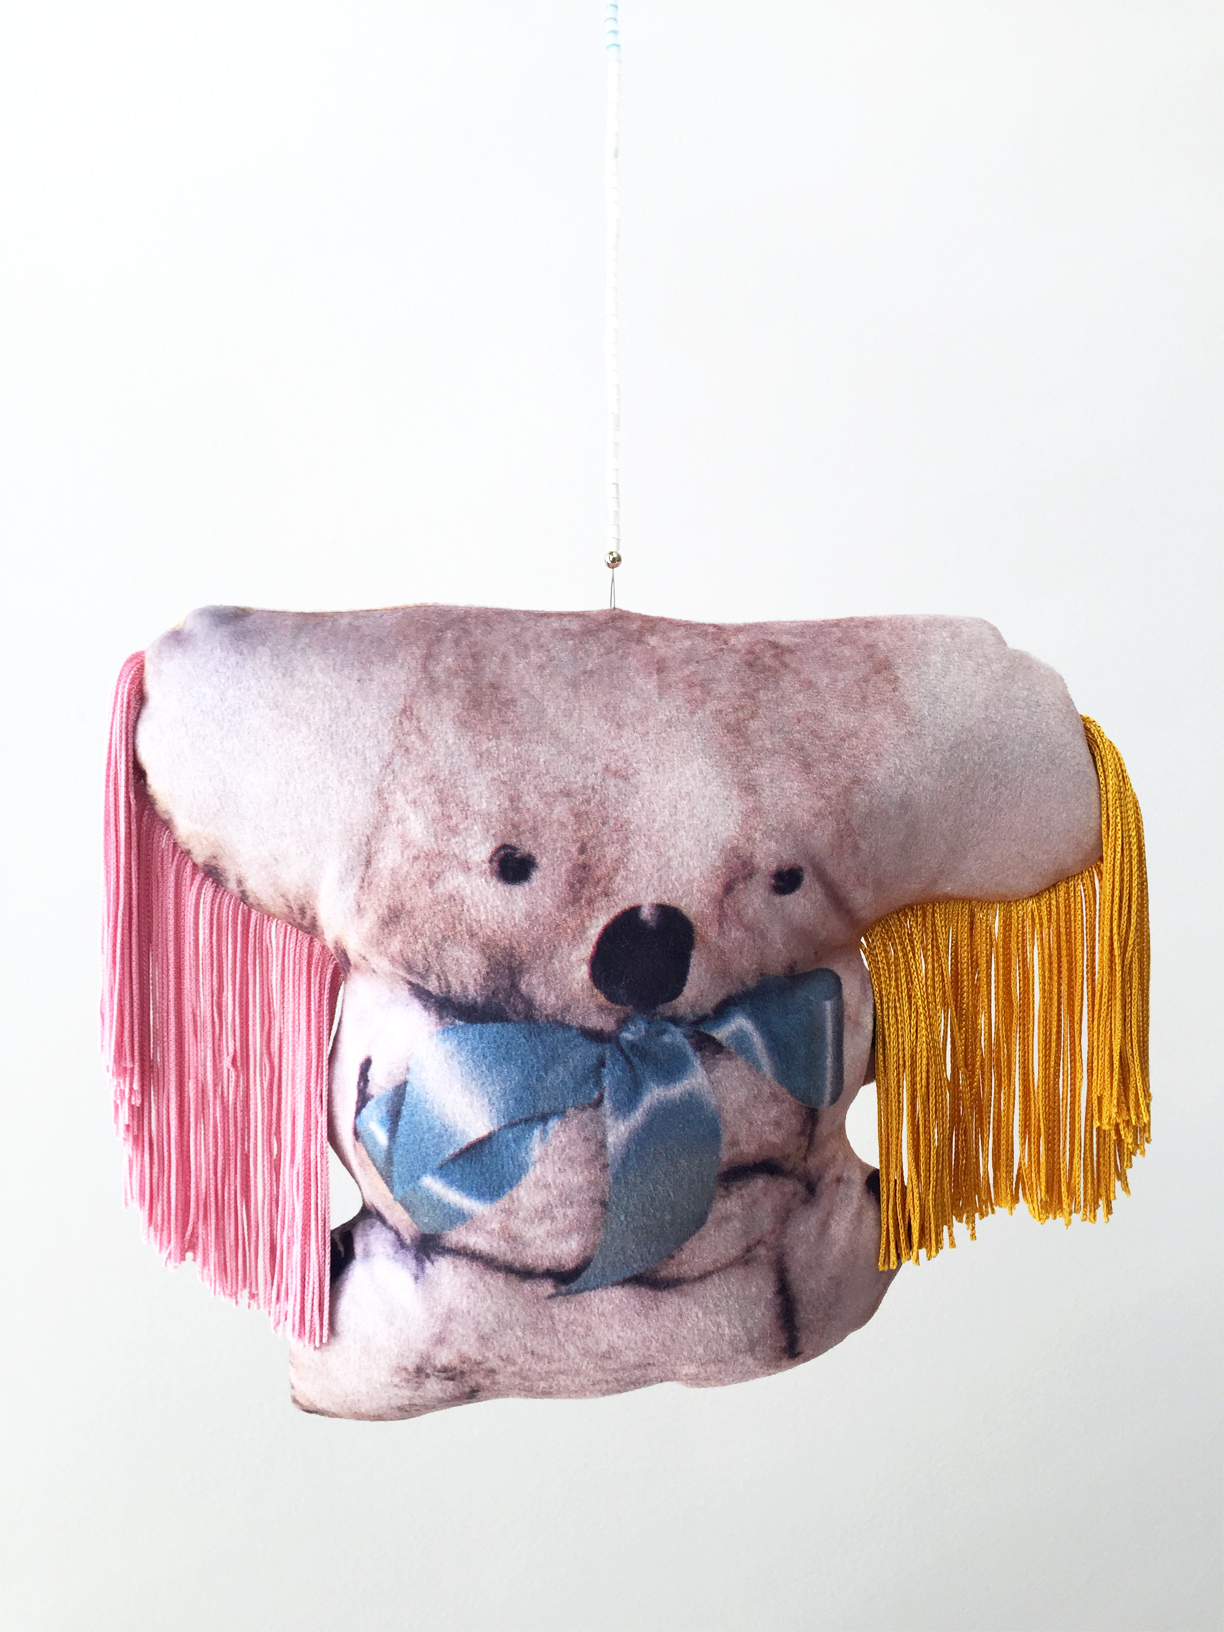 (How To) Make a Koala, 2019, digitally printed velvet, found image, polyester, wool, glass beads